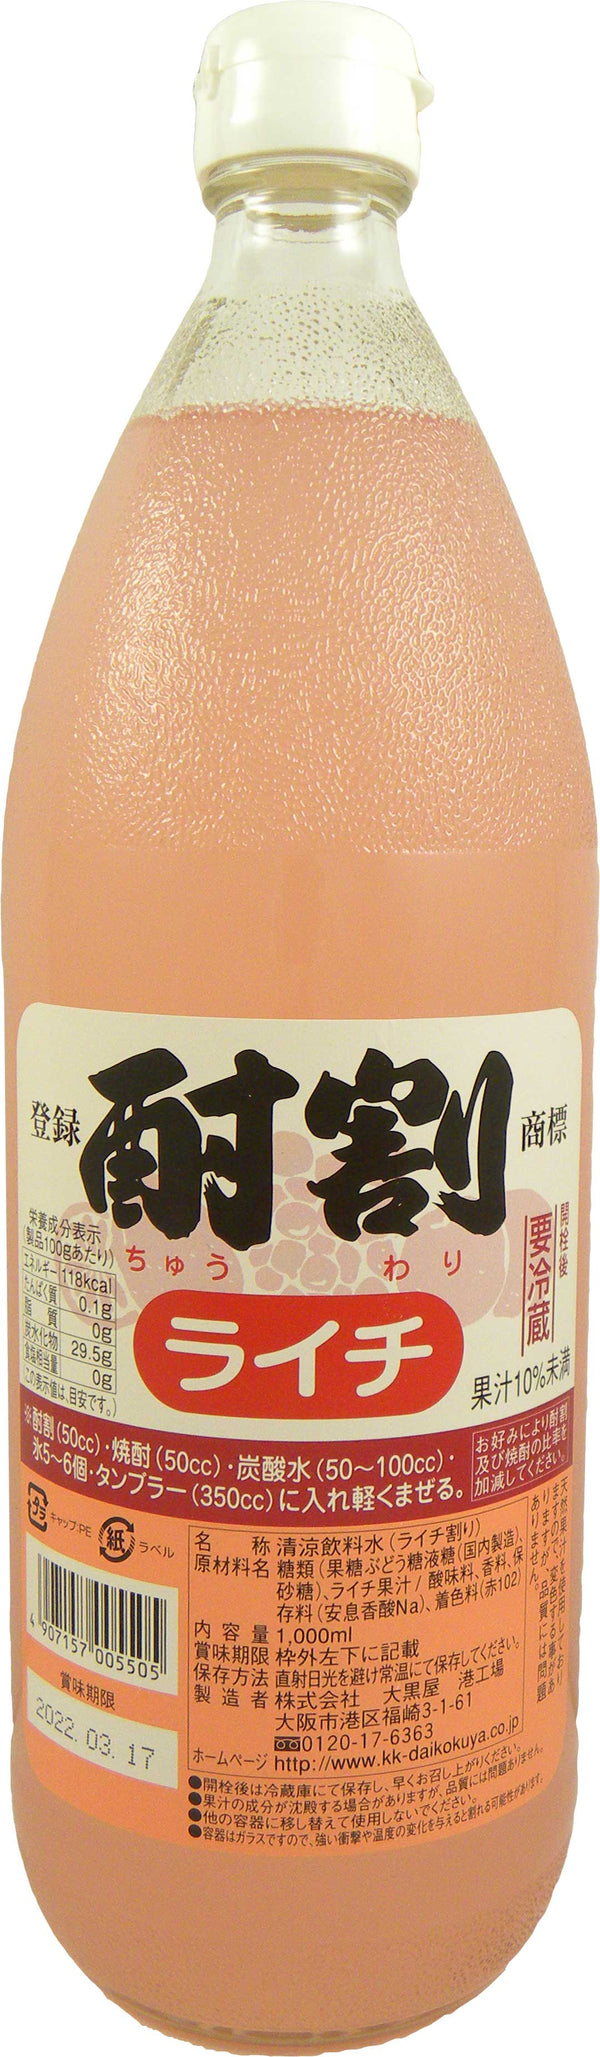 Daikokuya Chuwari Lychee 1L Bottle Syrup for Commercial Use